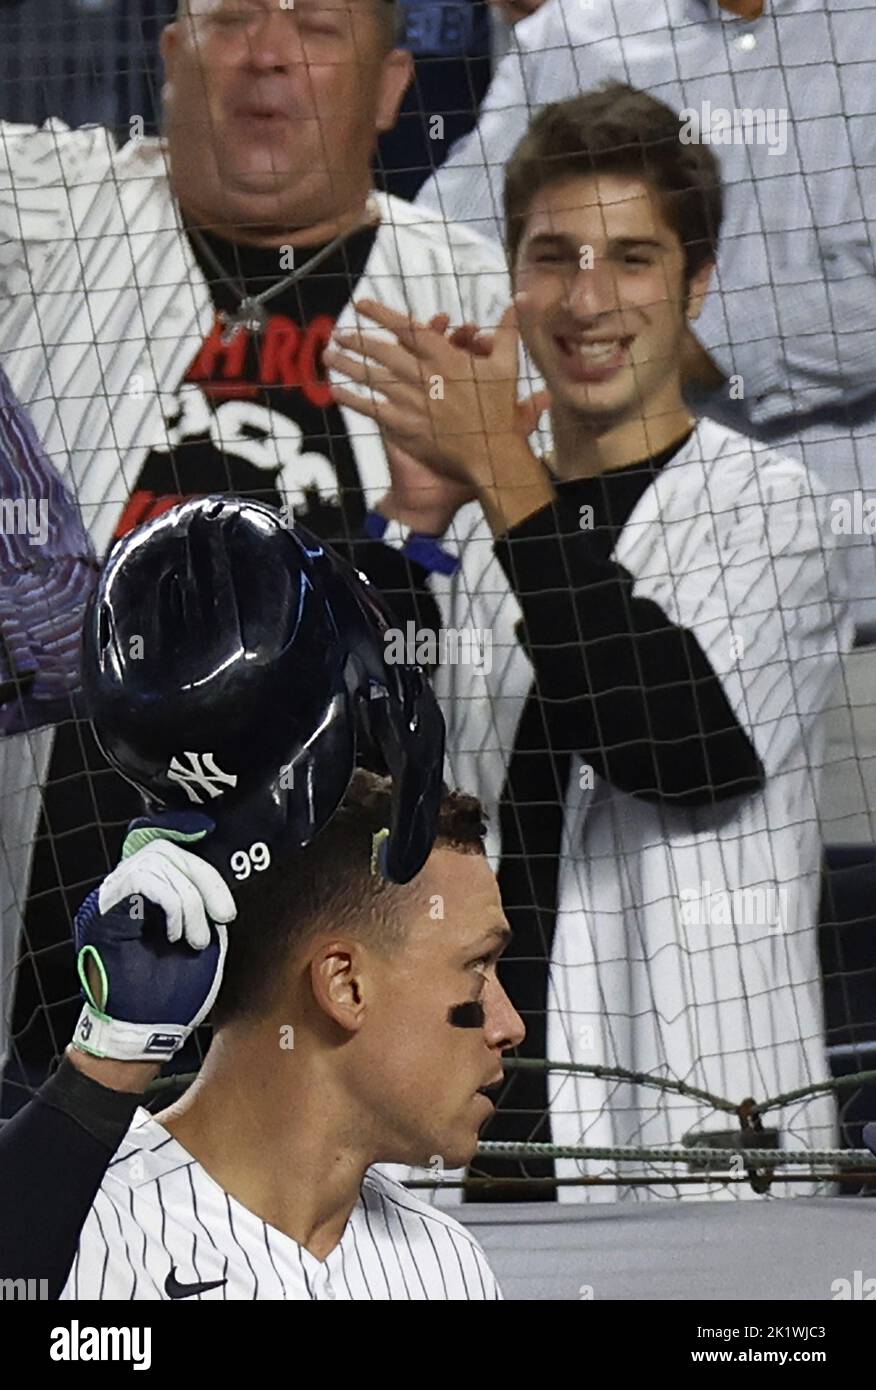 Judge hits No. 61 to tie Maris' AL homer record, Yankees win - The San  Diego Union-Tribune